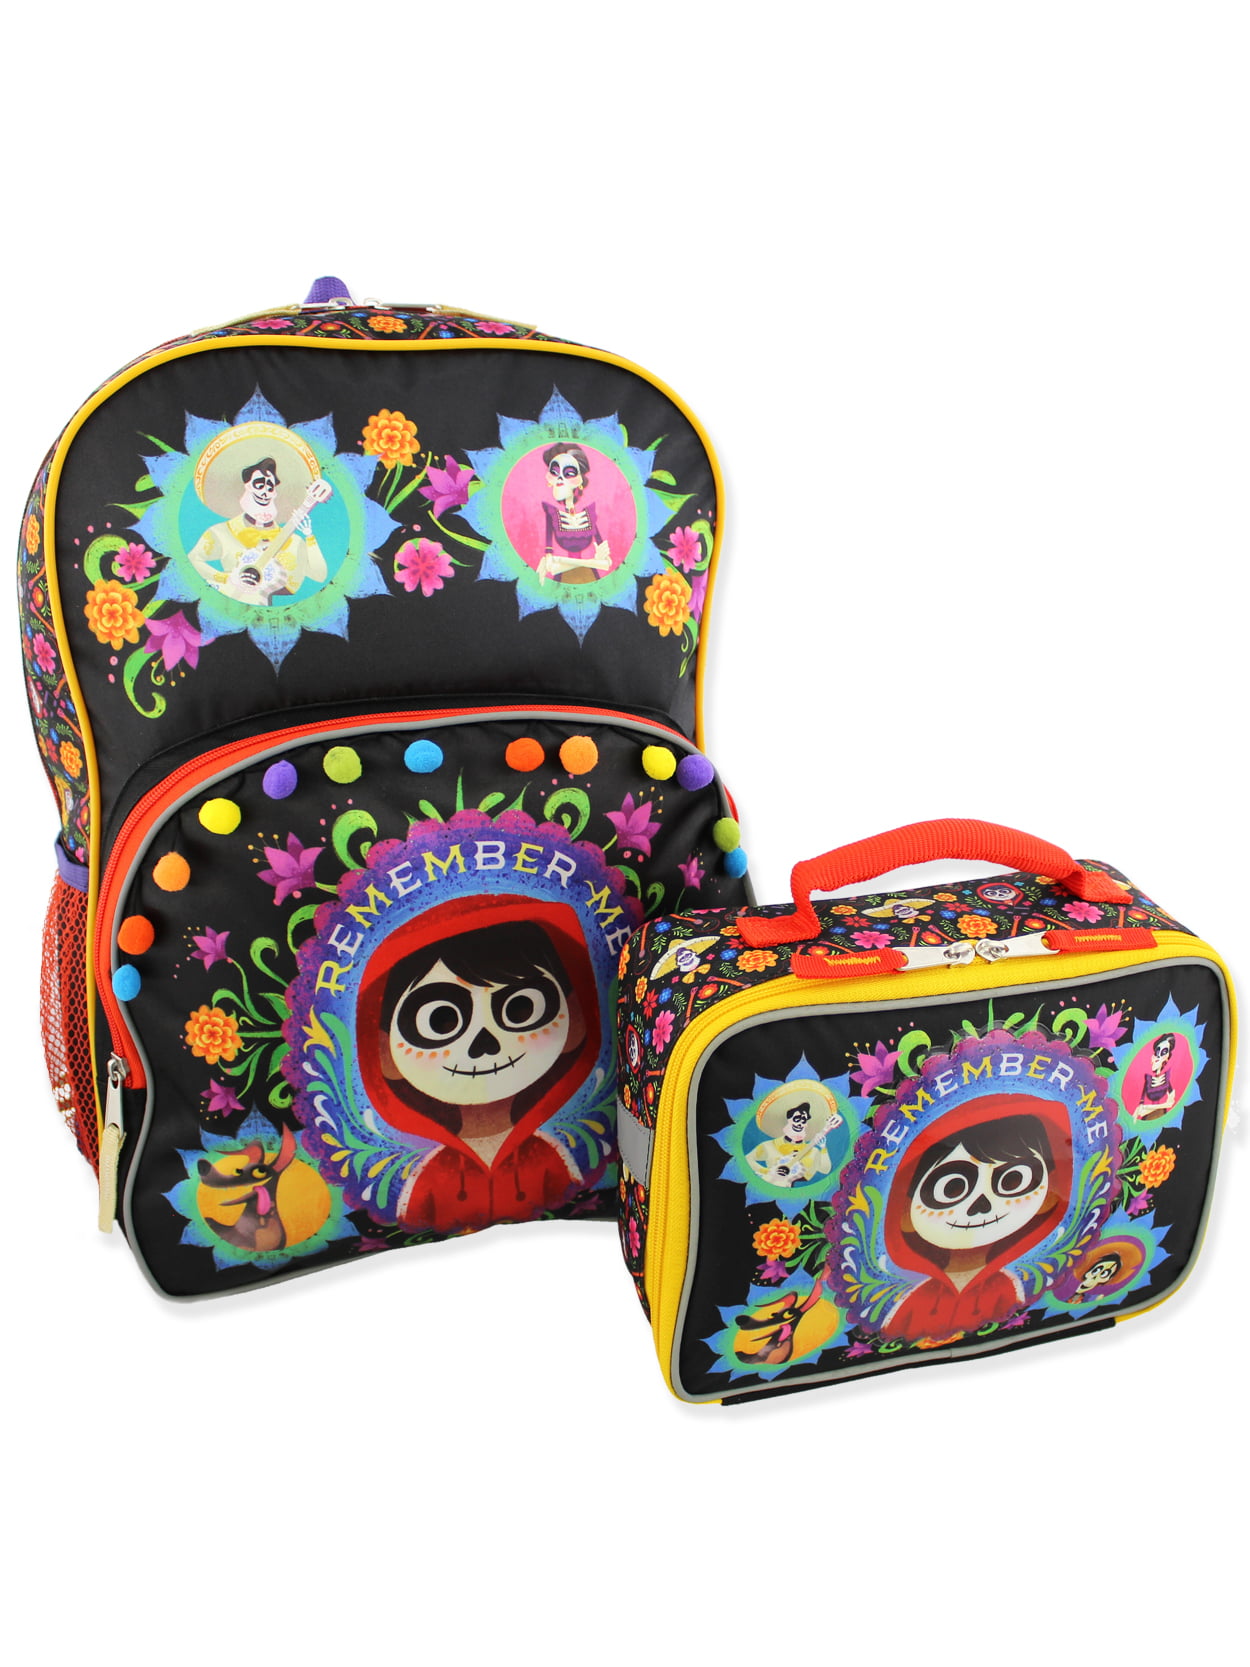 12/" Disney Pixar Coco Backpack Small School Bag Bookbag w// Lunch Bag